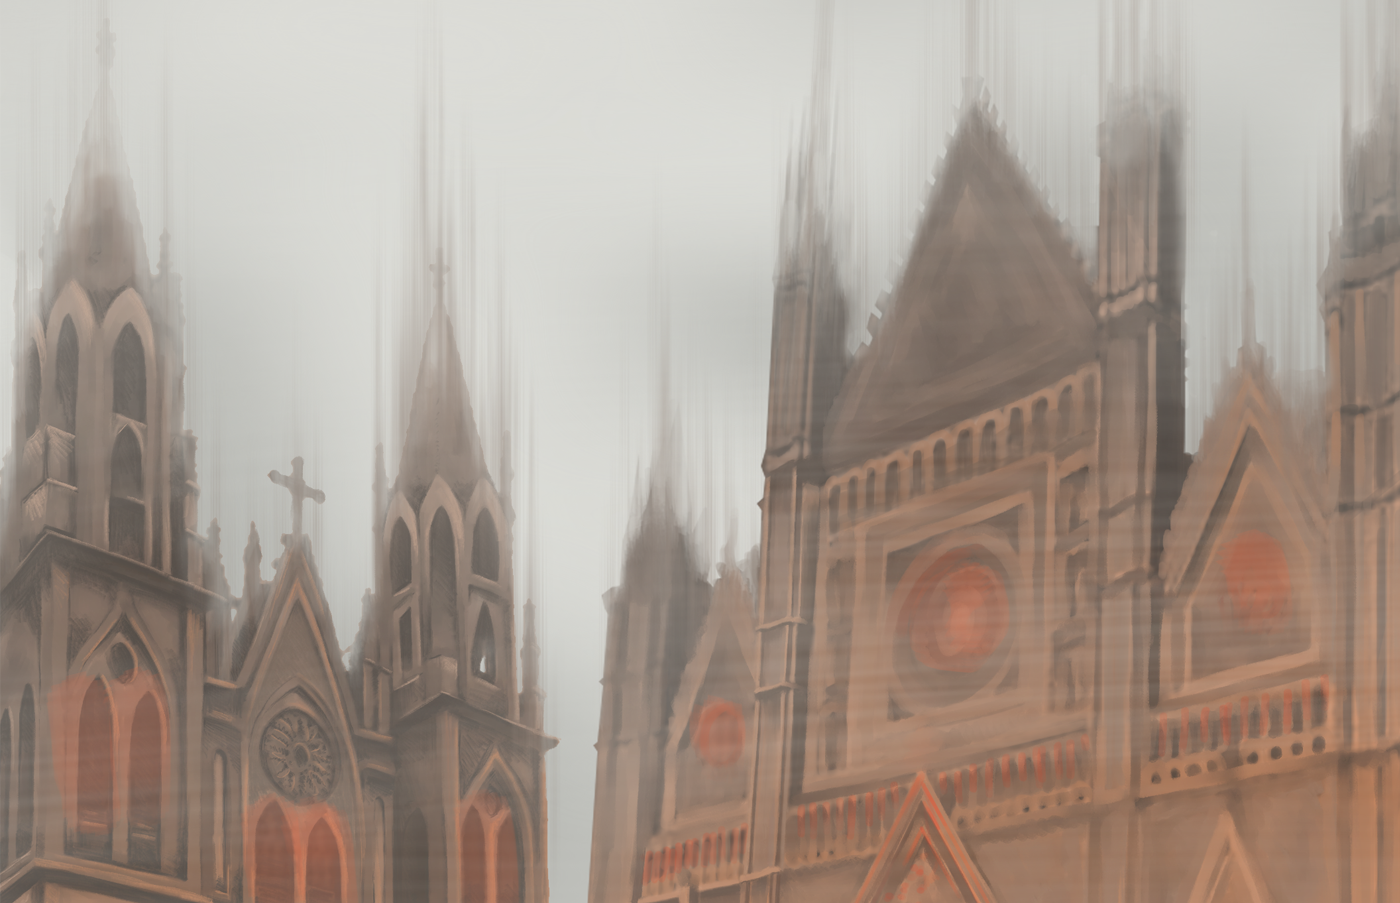 demon demon bride bride demonic concept cathedral gothic mist